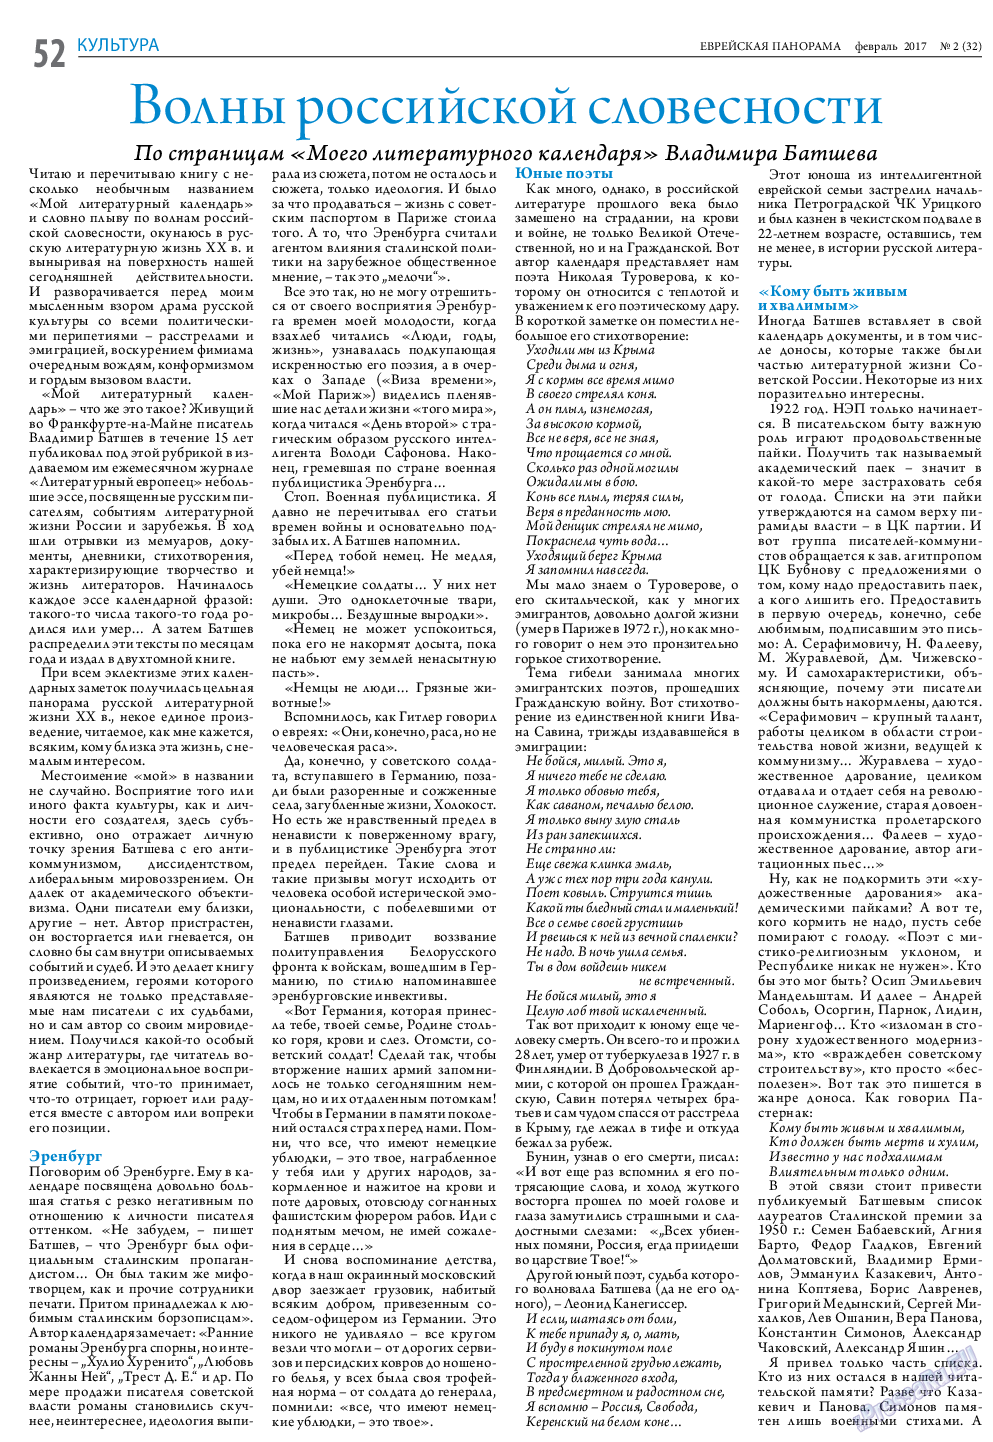 Еврейская панорама, газета. 2017 №2 стр.52